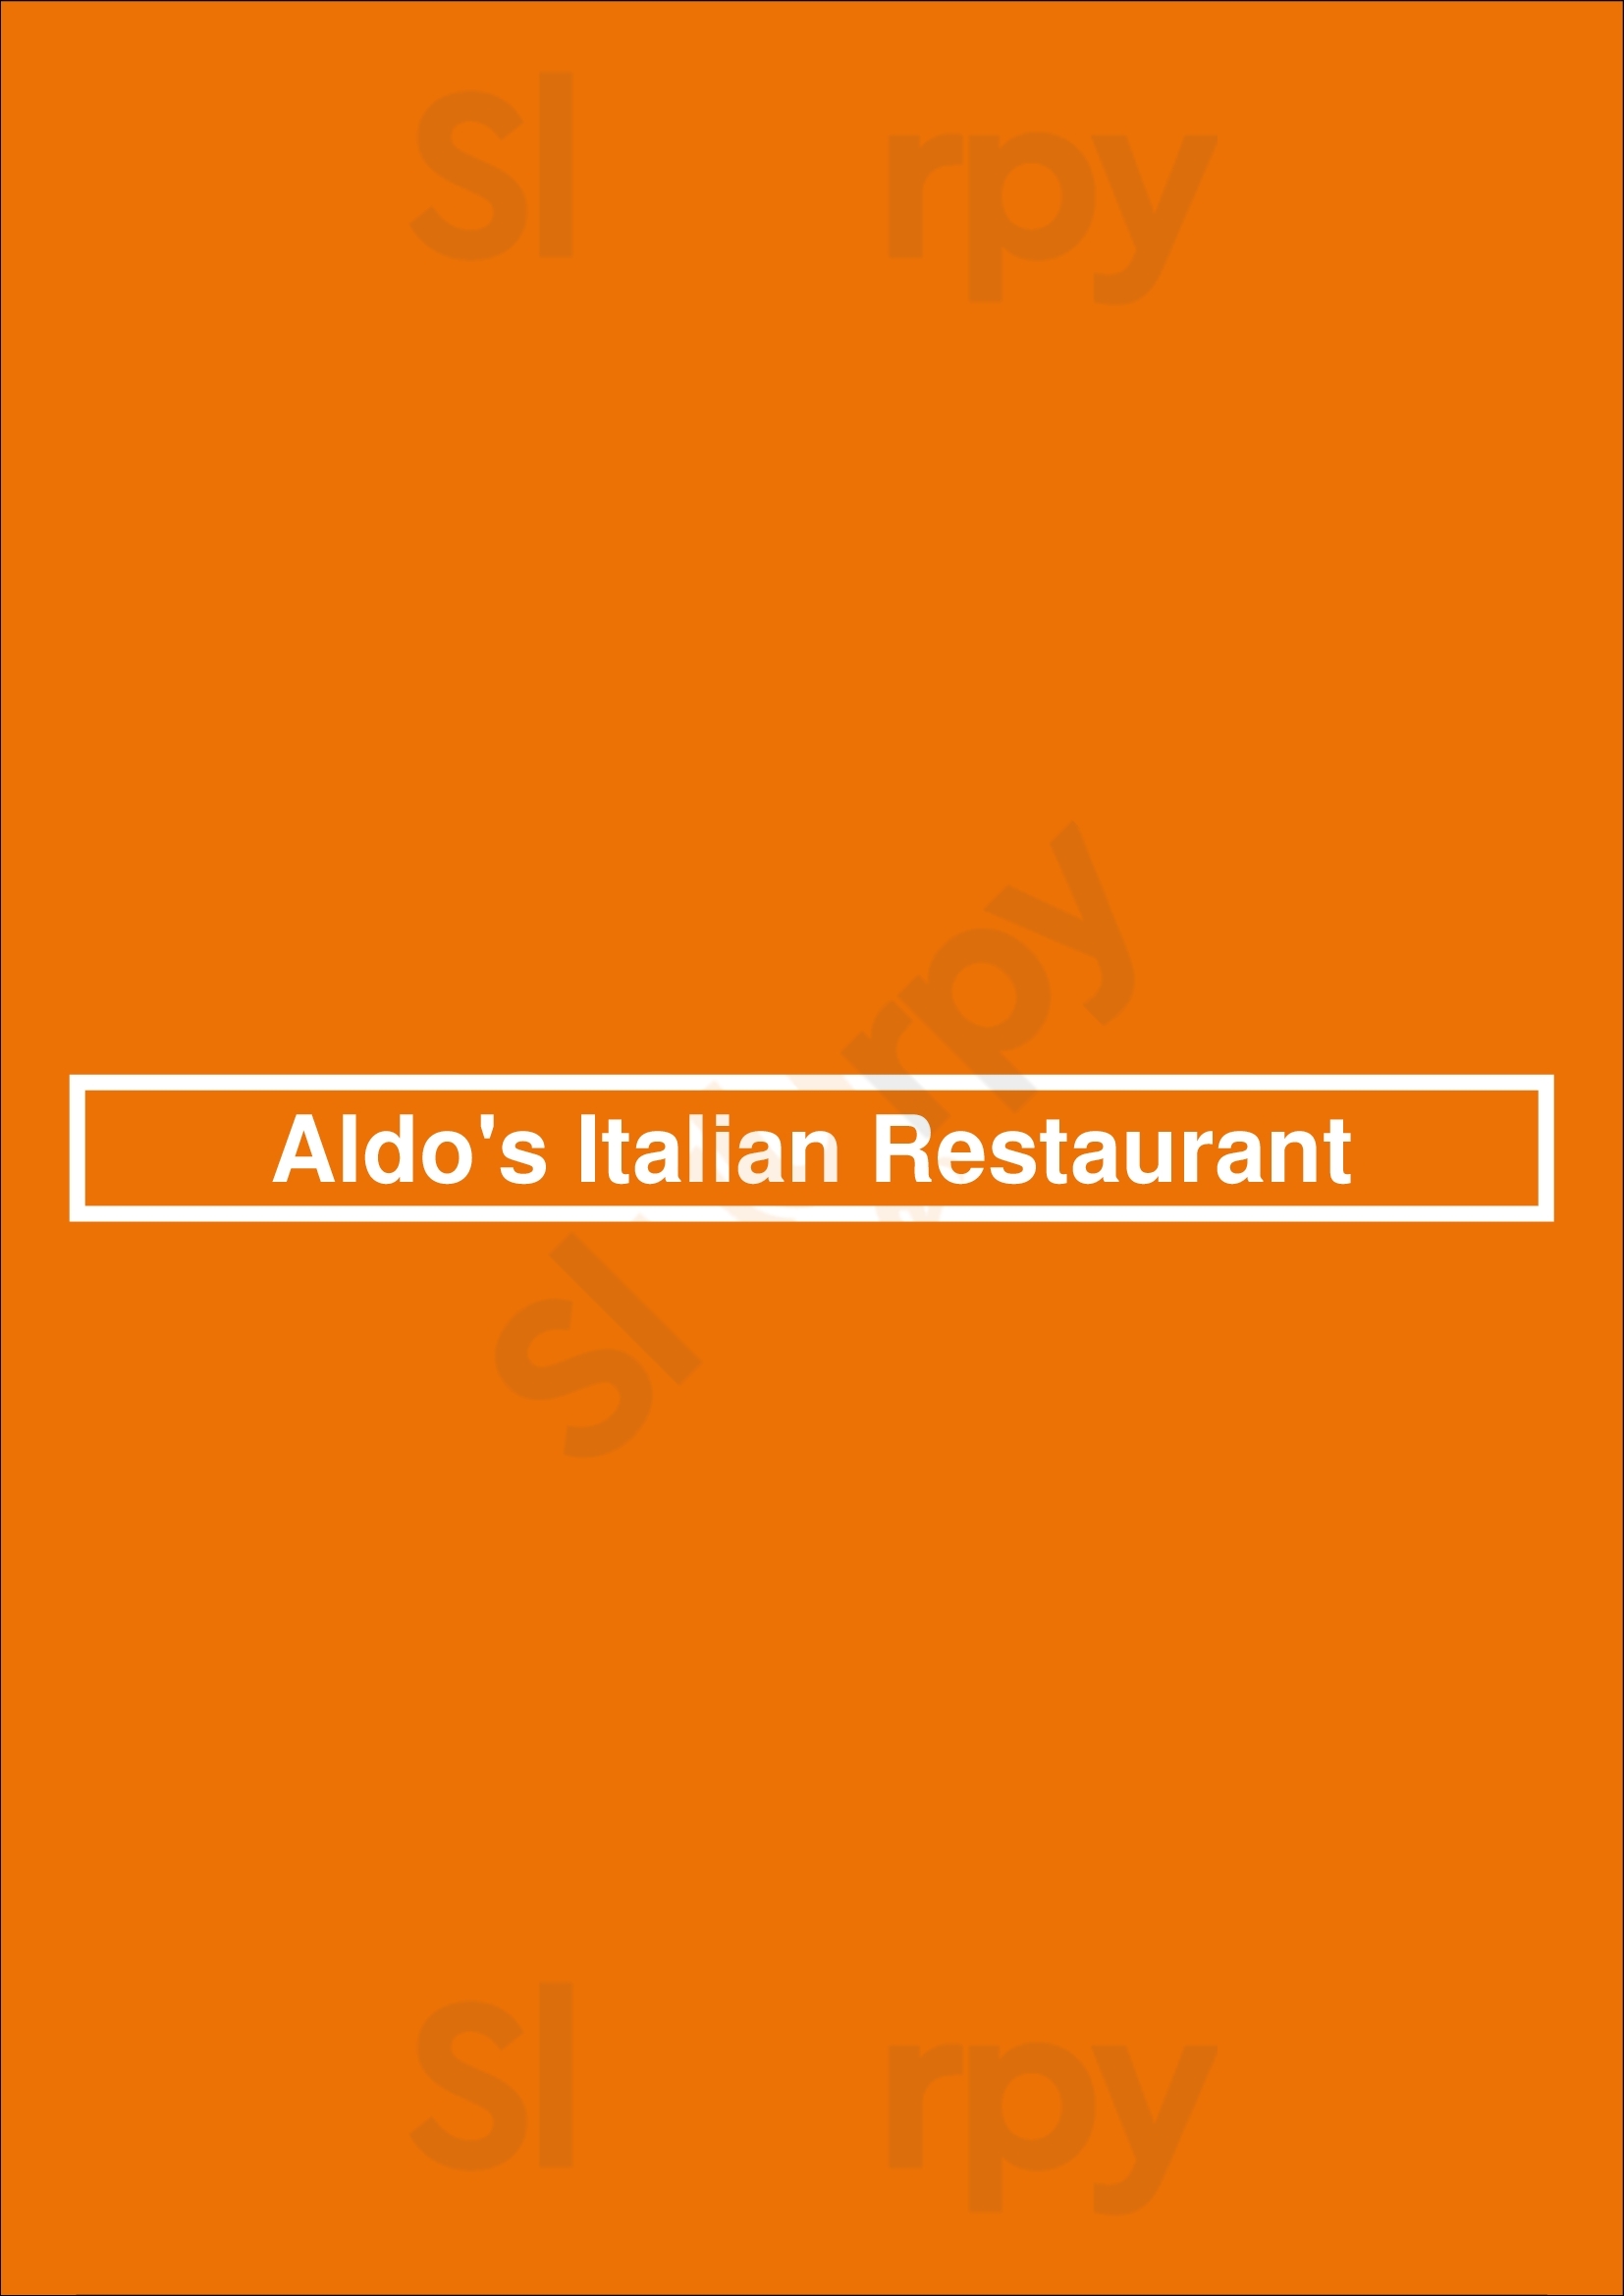 Aldo's Italian Restaurant Atlanta Menu - 1